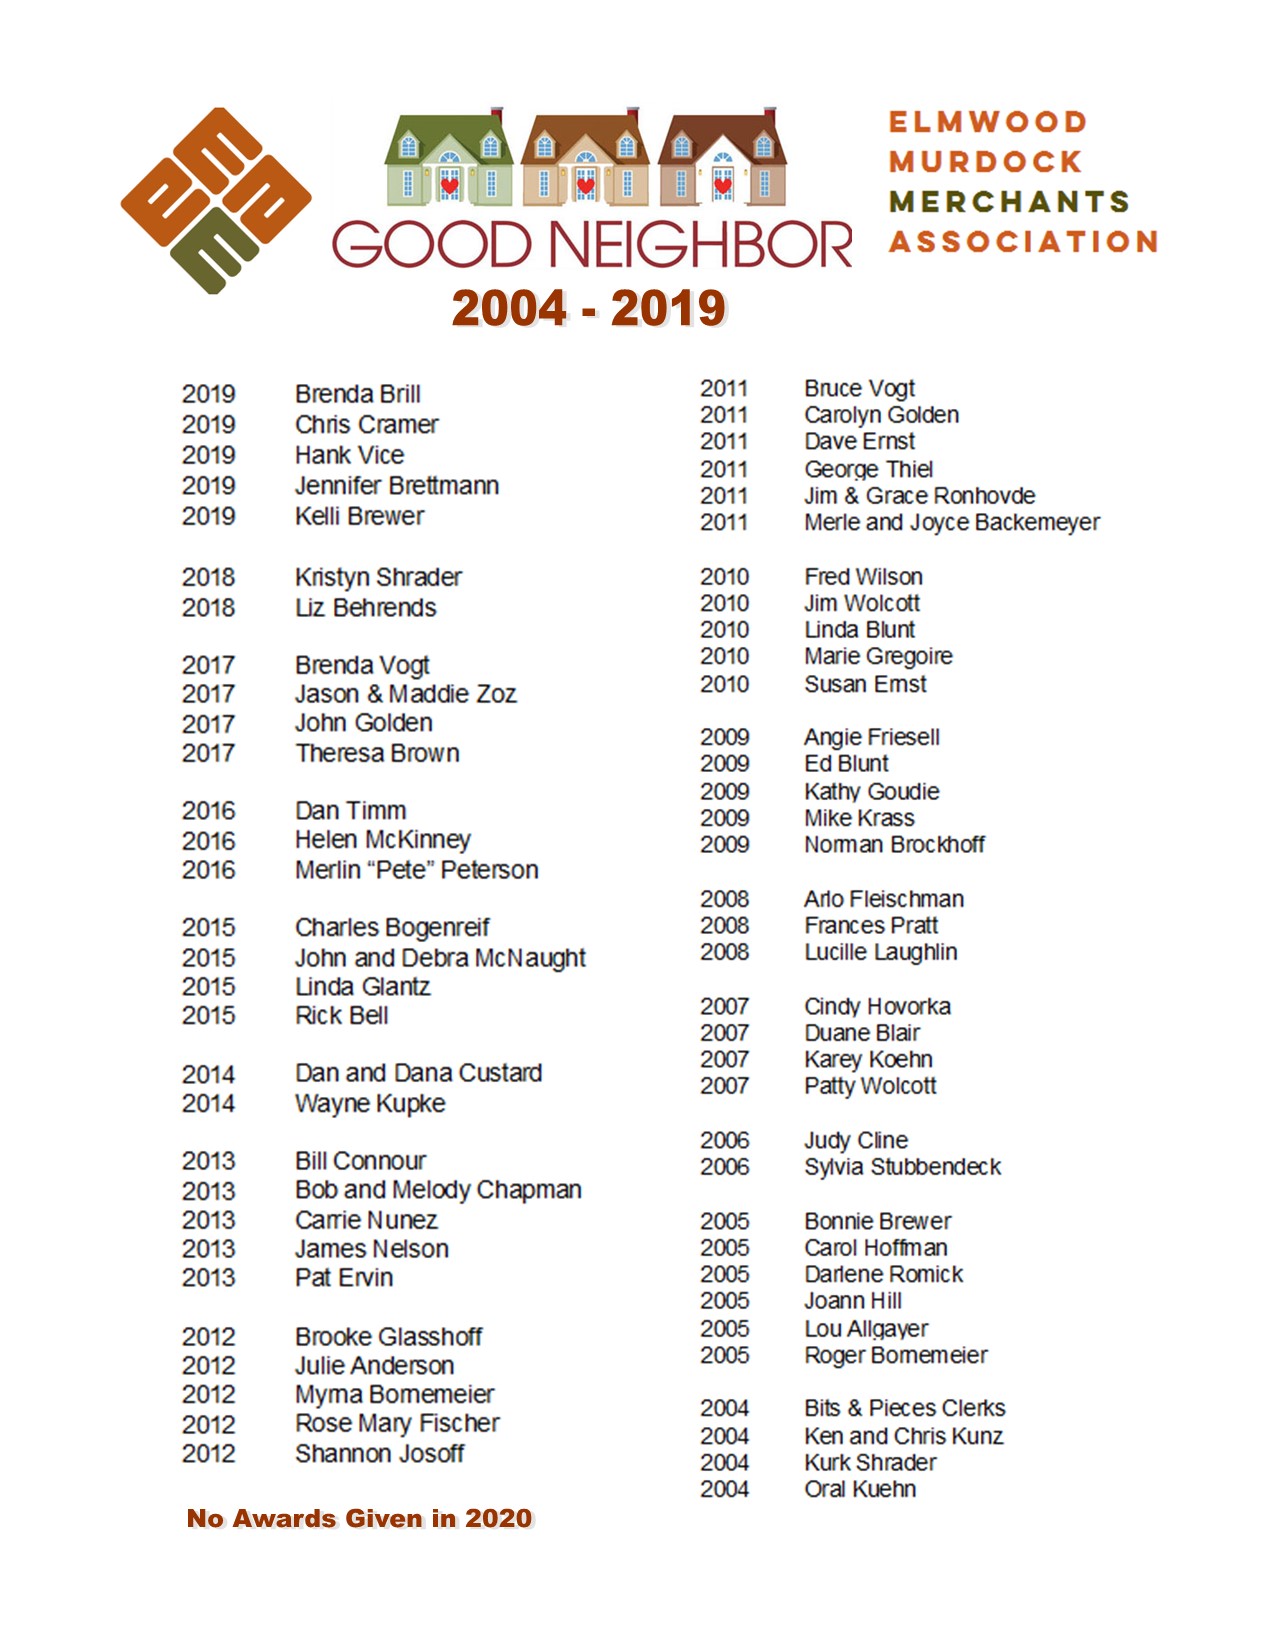 1 List of good neighbors through 2020